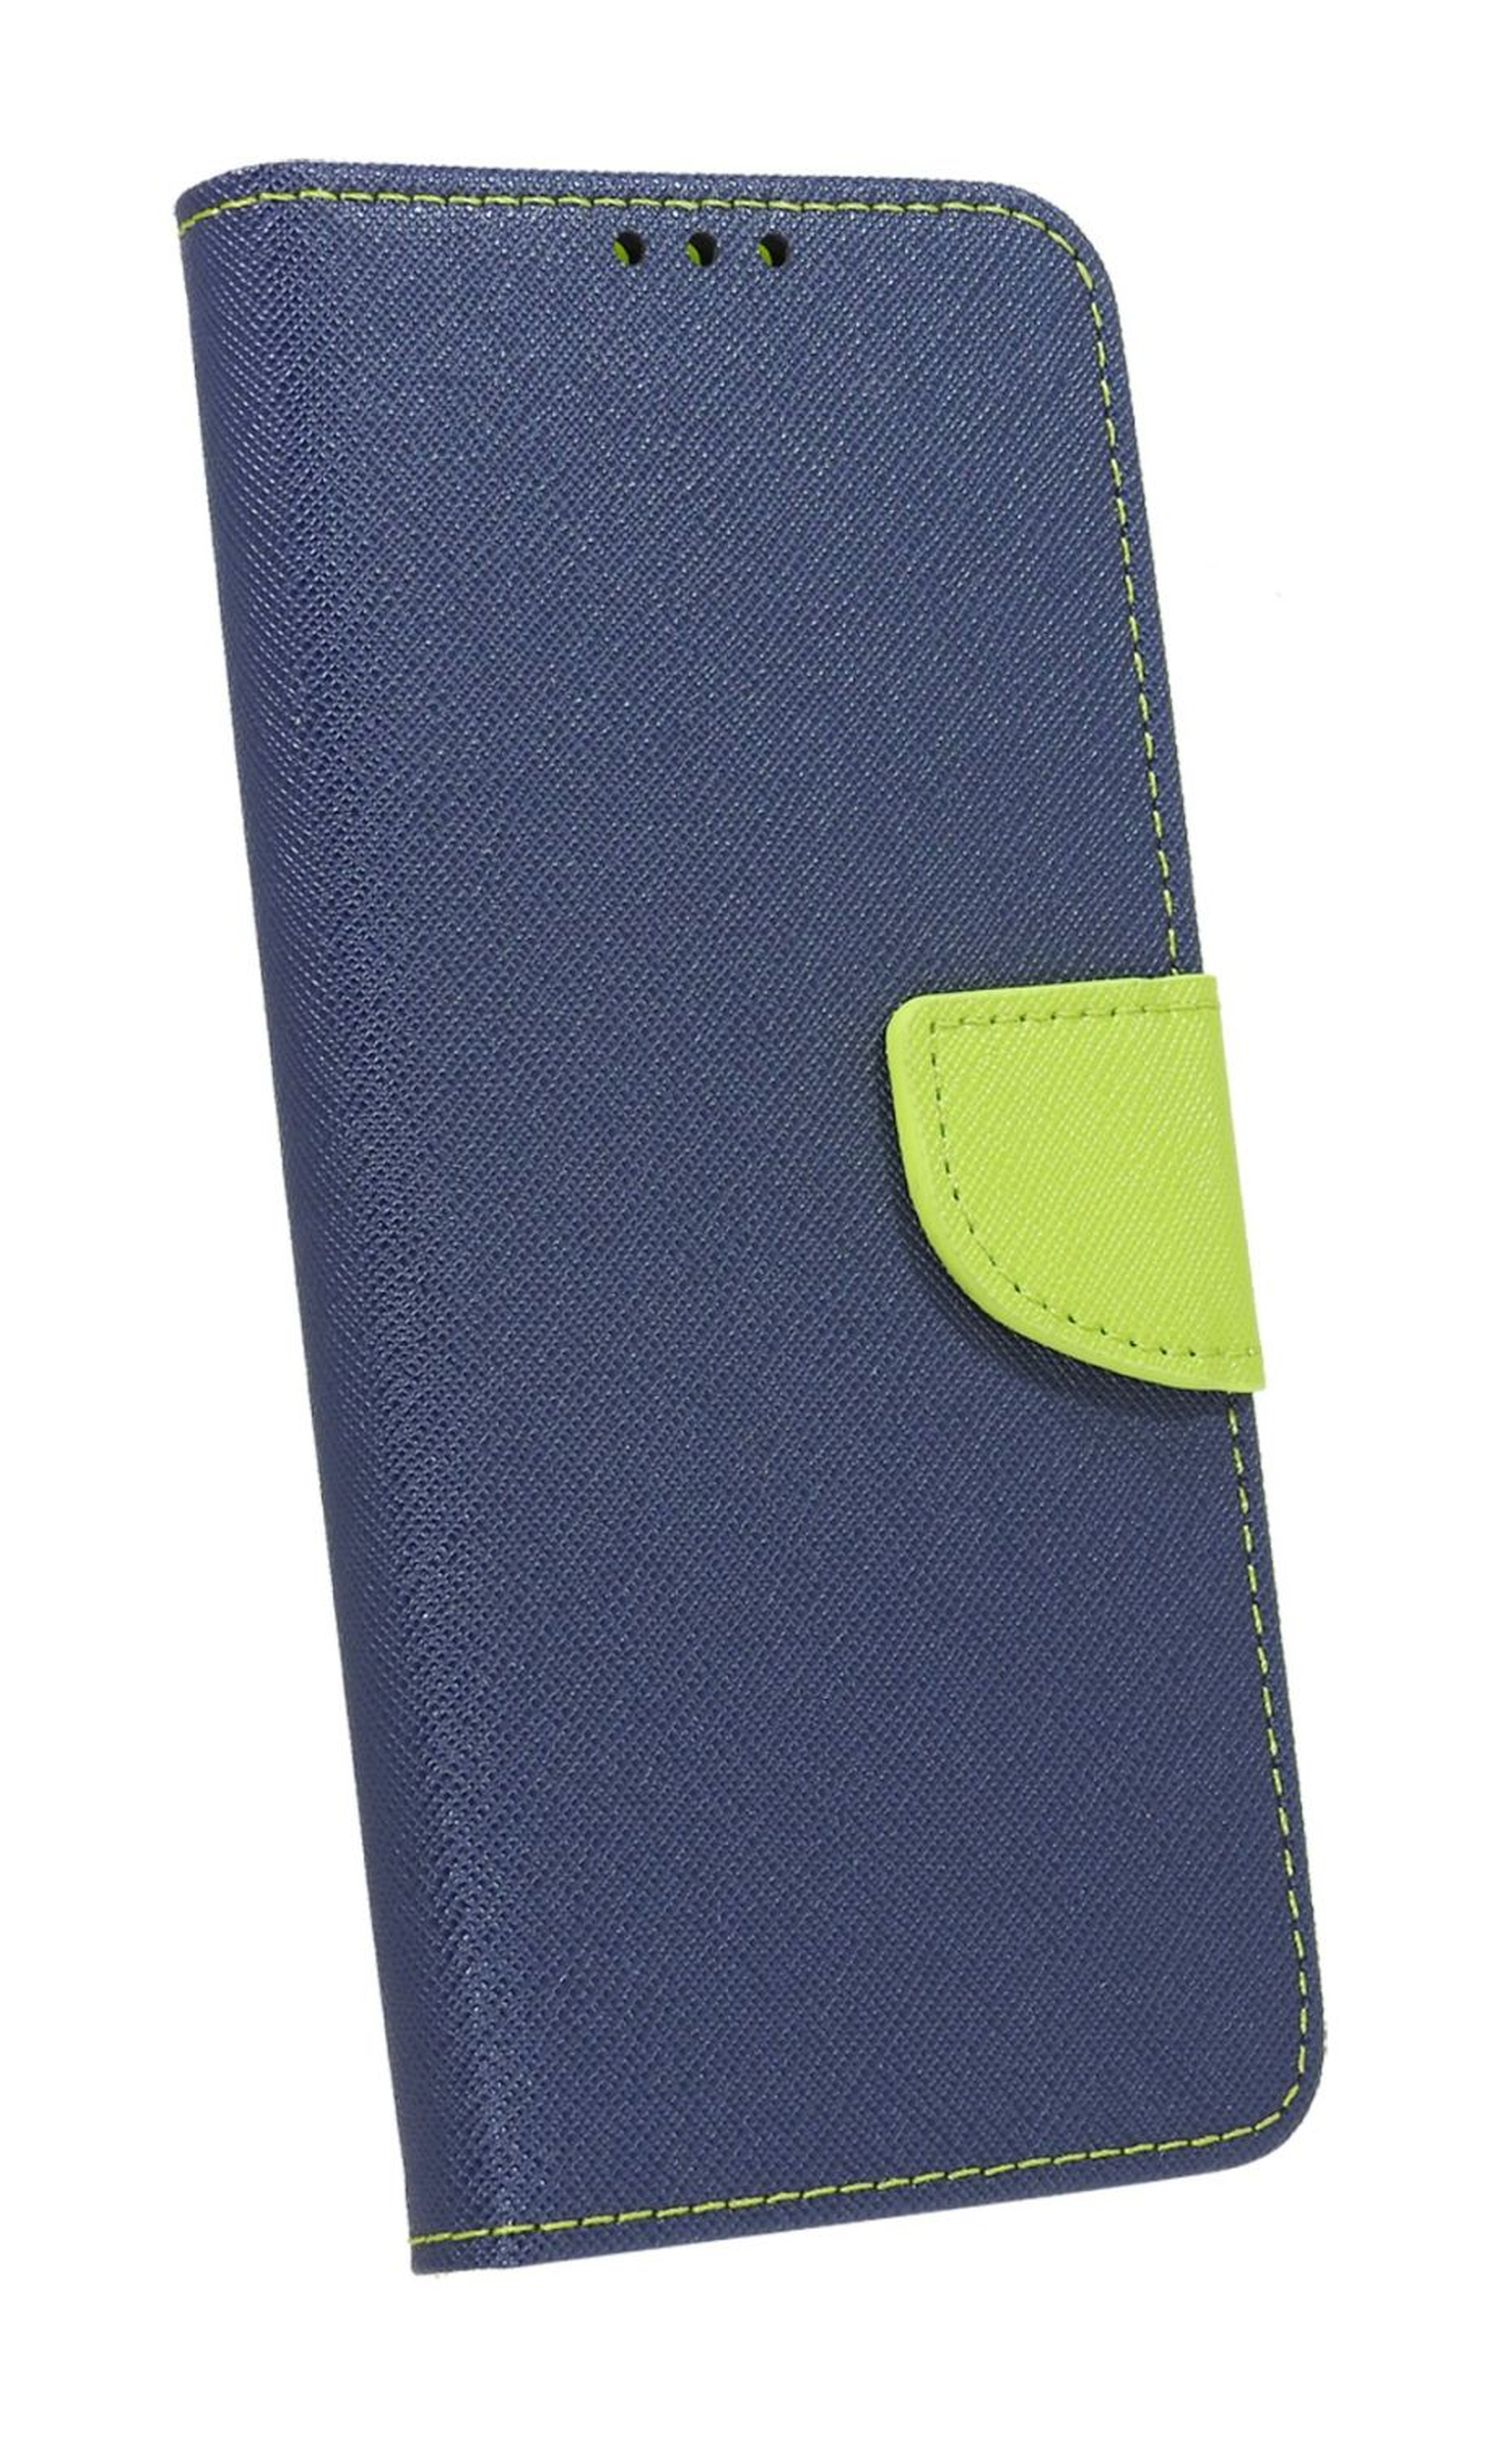 COFI Fancy LG, K62, Bookcover, Blau Case